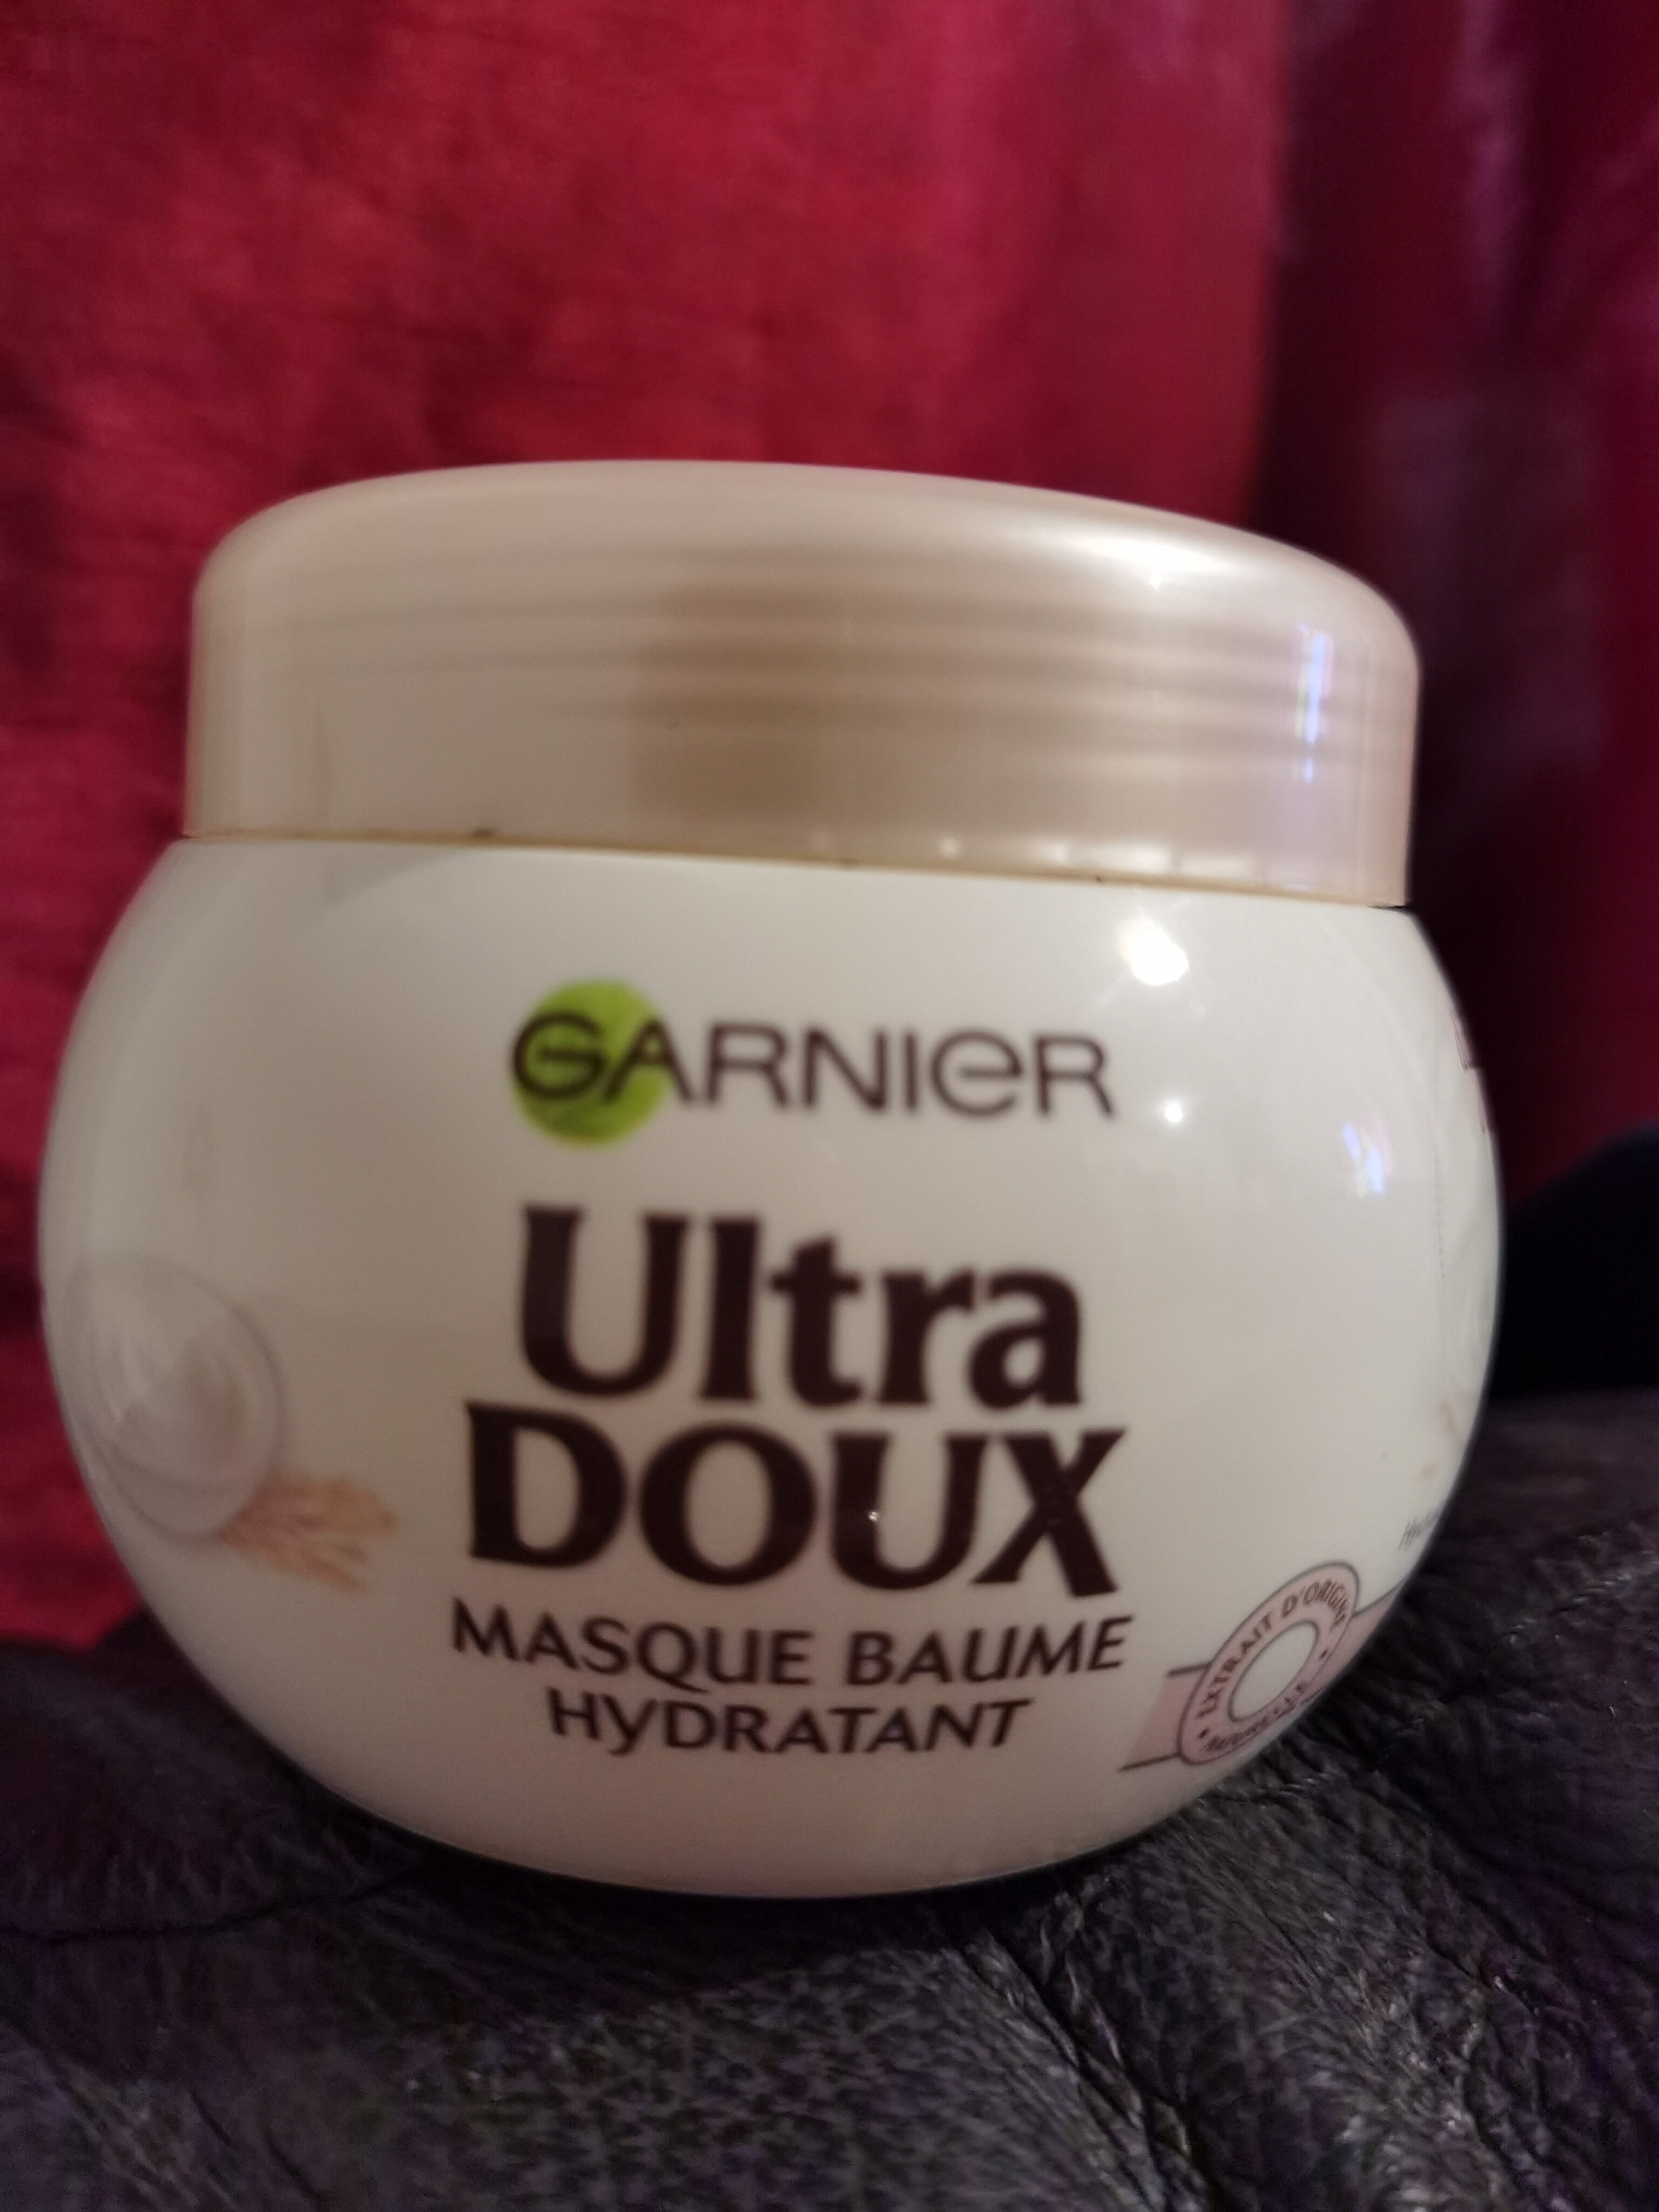 Ultra doux masque baume hydratant - Produto - fr